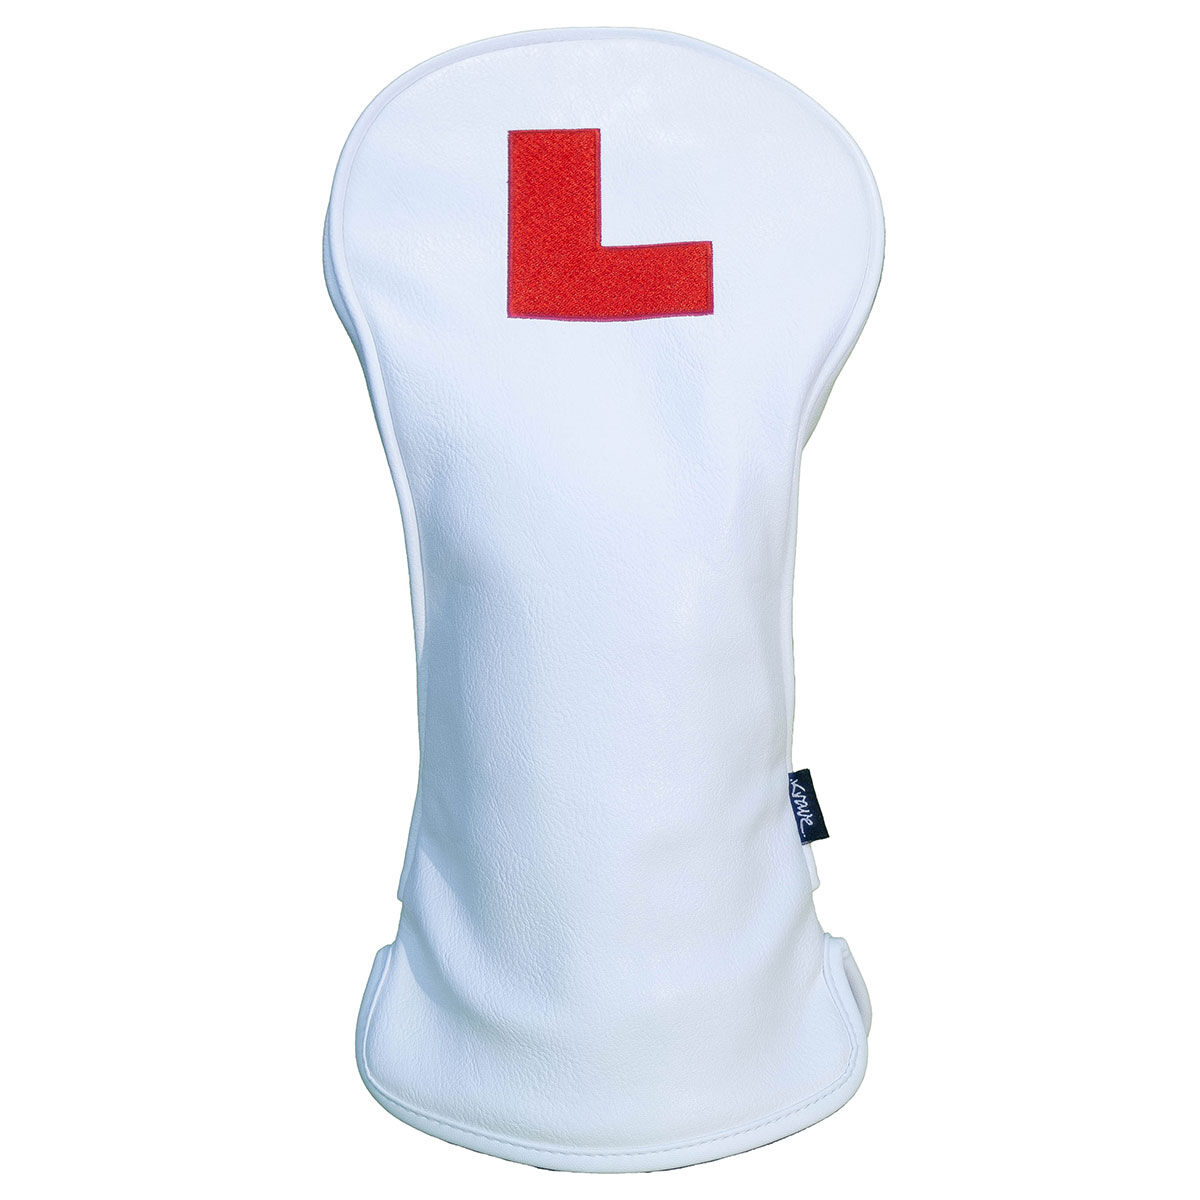 Krave Learner Golf Fairway Head Cover, Mens, Fairway, White/red | American Golf